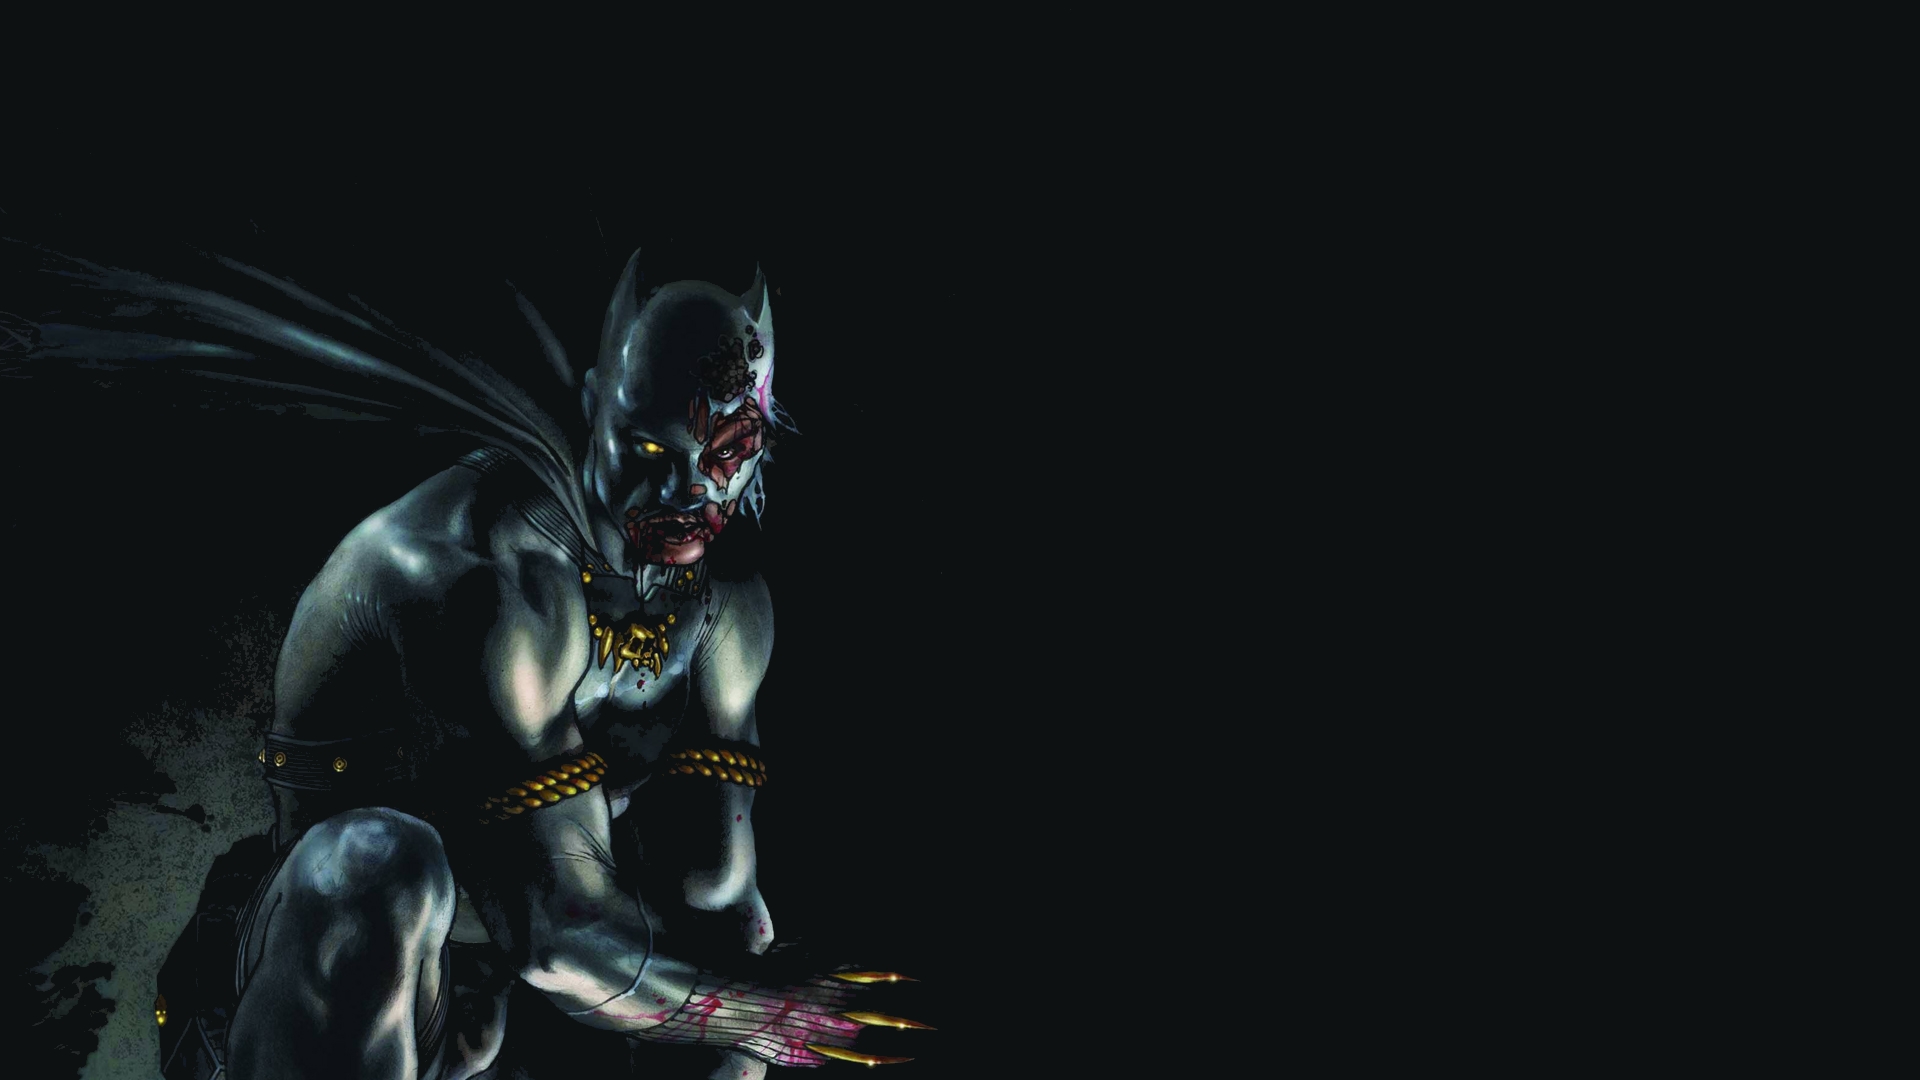 schwarzer panther wunder hd wallpaper,batman,erfundener charakter,dämon,dunkelheit,superheld